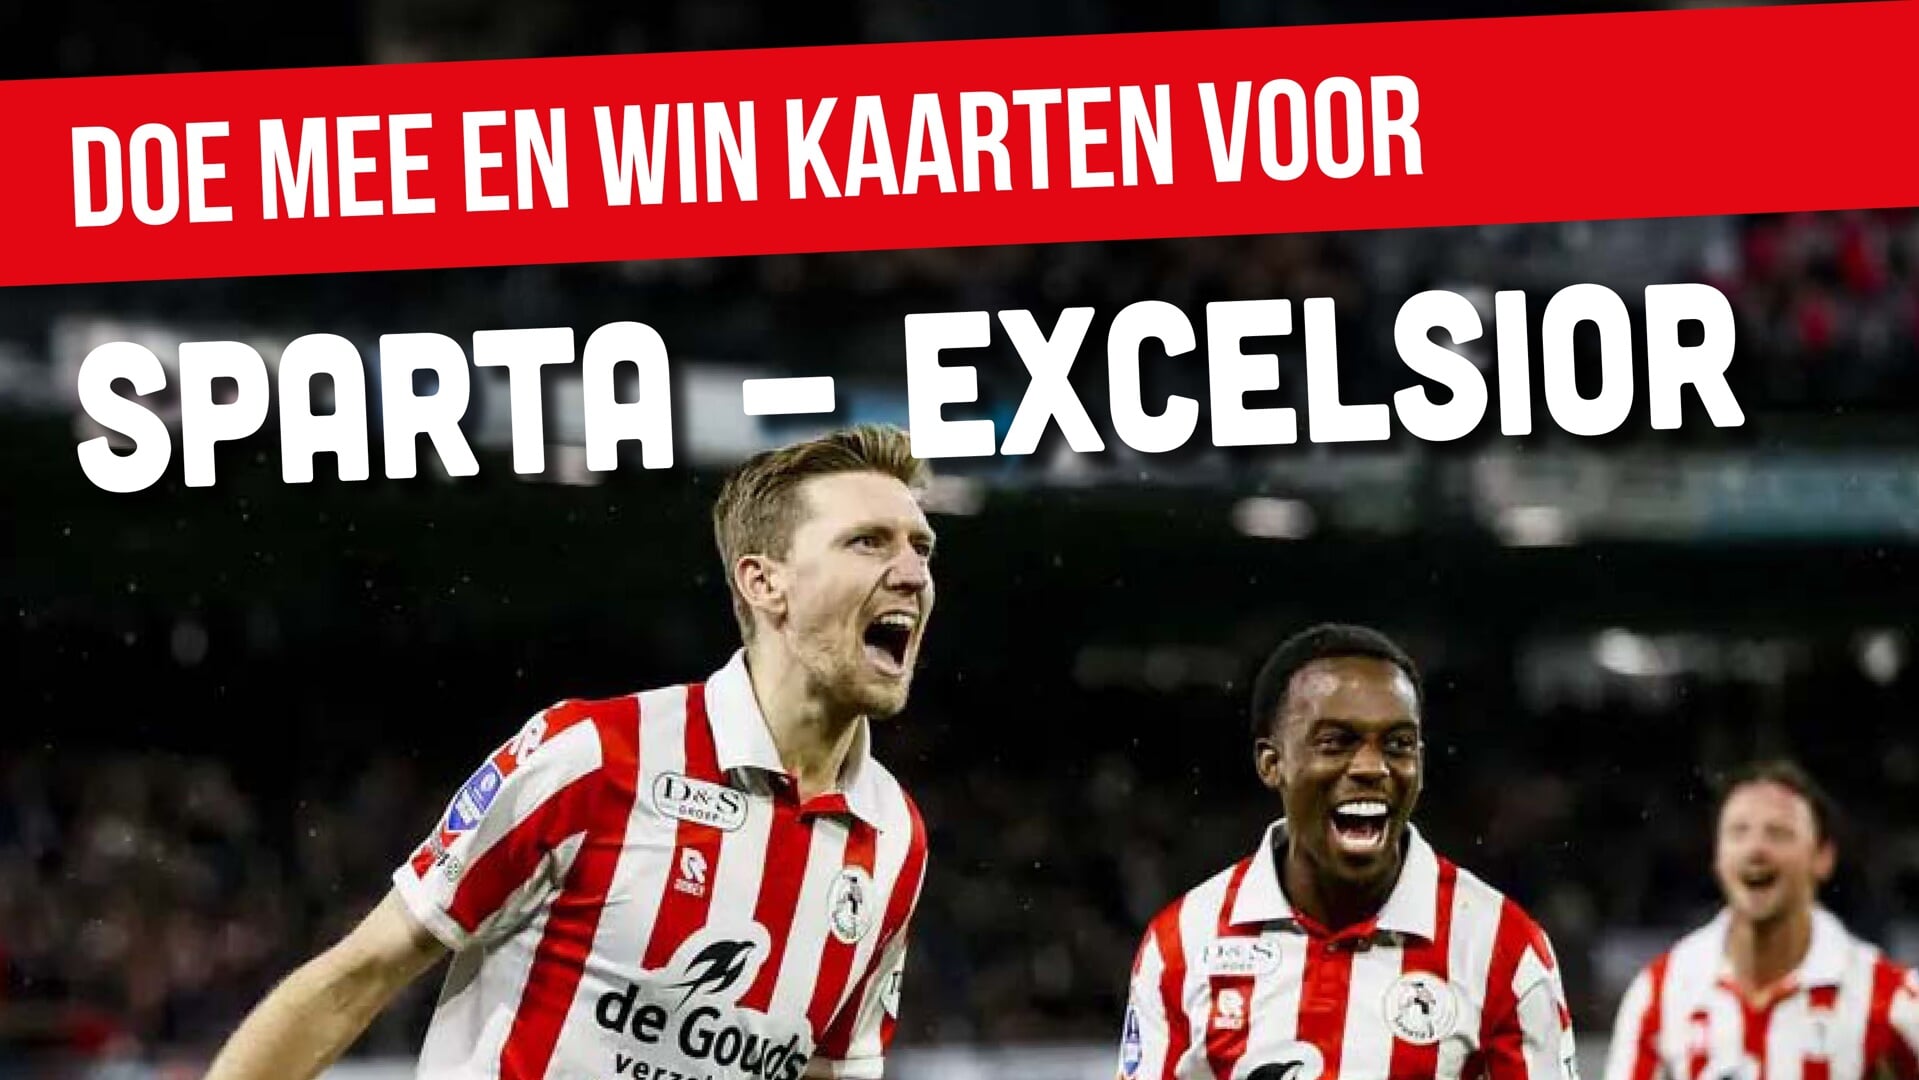 Gratis kaarten voor de Rotterdamse derby Sparta Rotterdam – Excelsior!